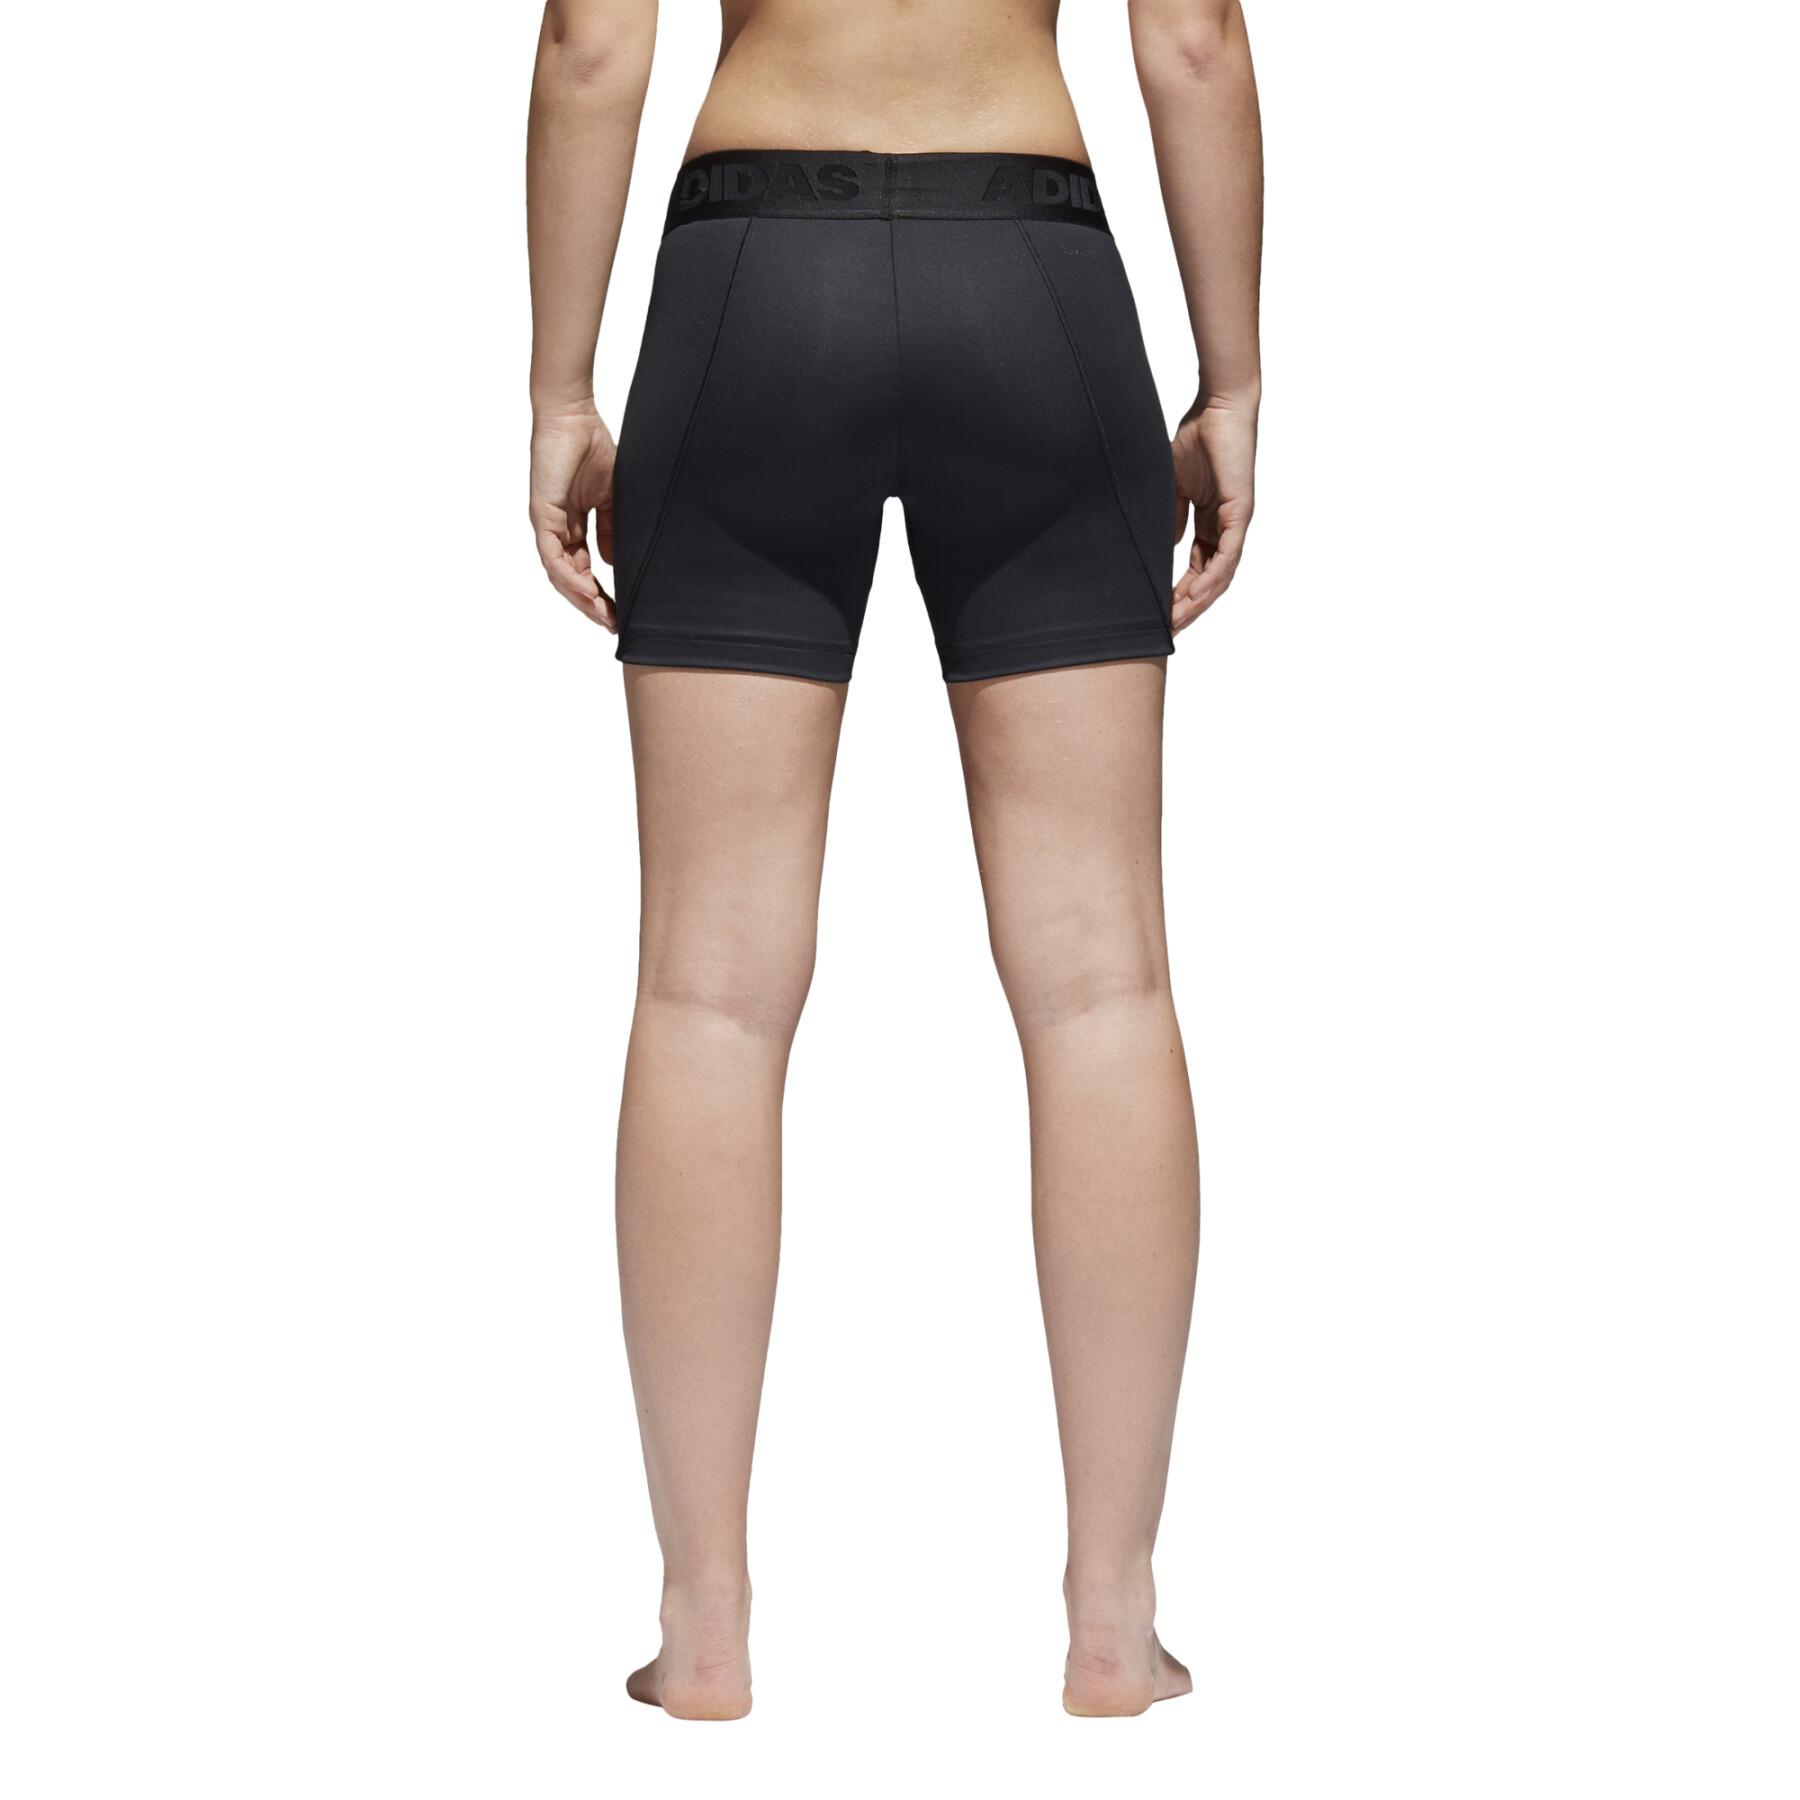 Women's compression shorts adidas Alphaskin sprt 5inch